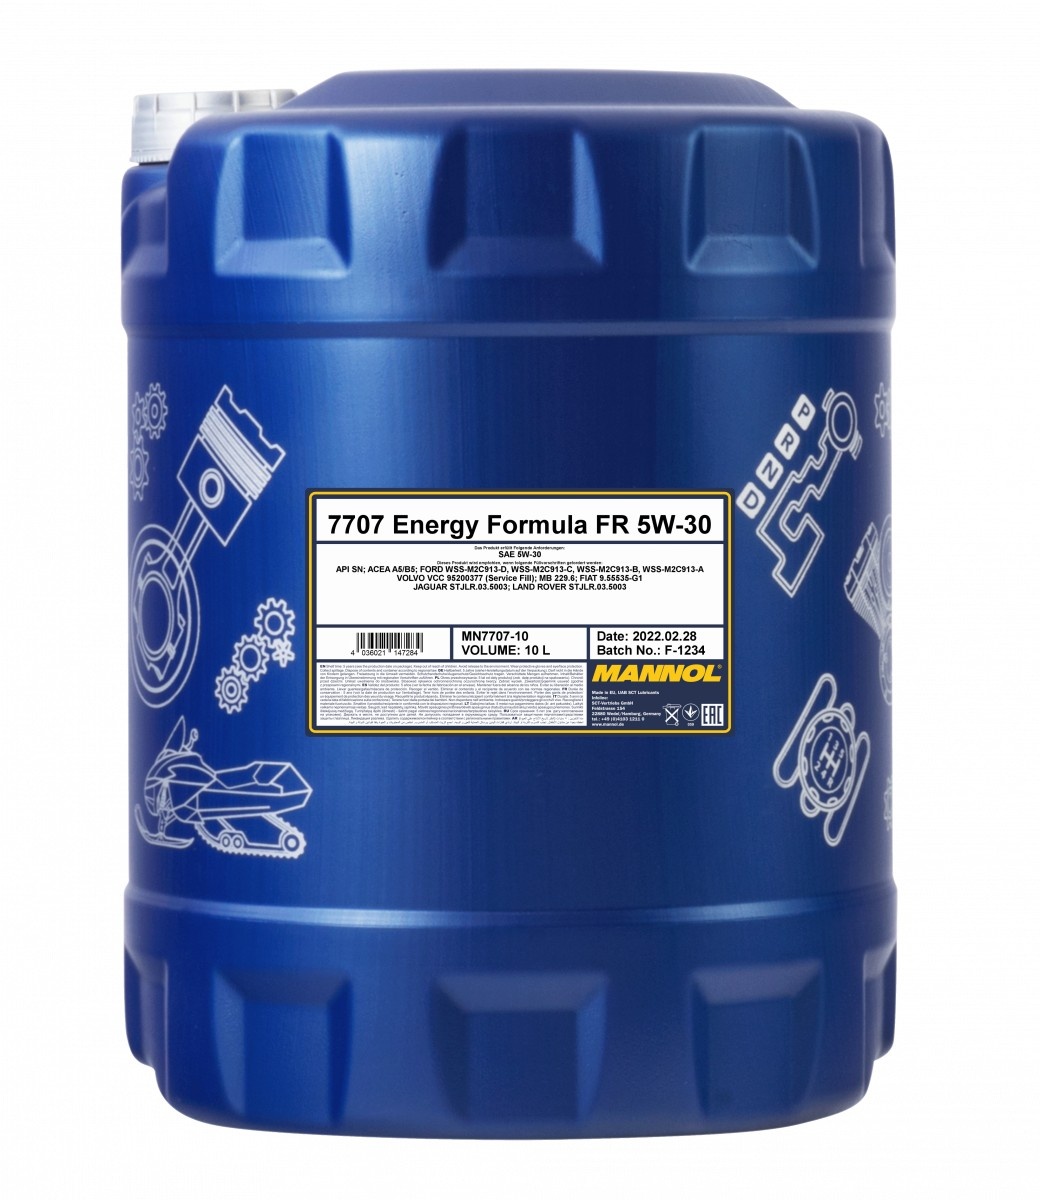 Моторное масло Mannol Energy Formula FR 5W-30 7707 10L